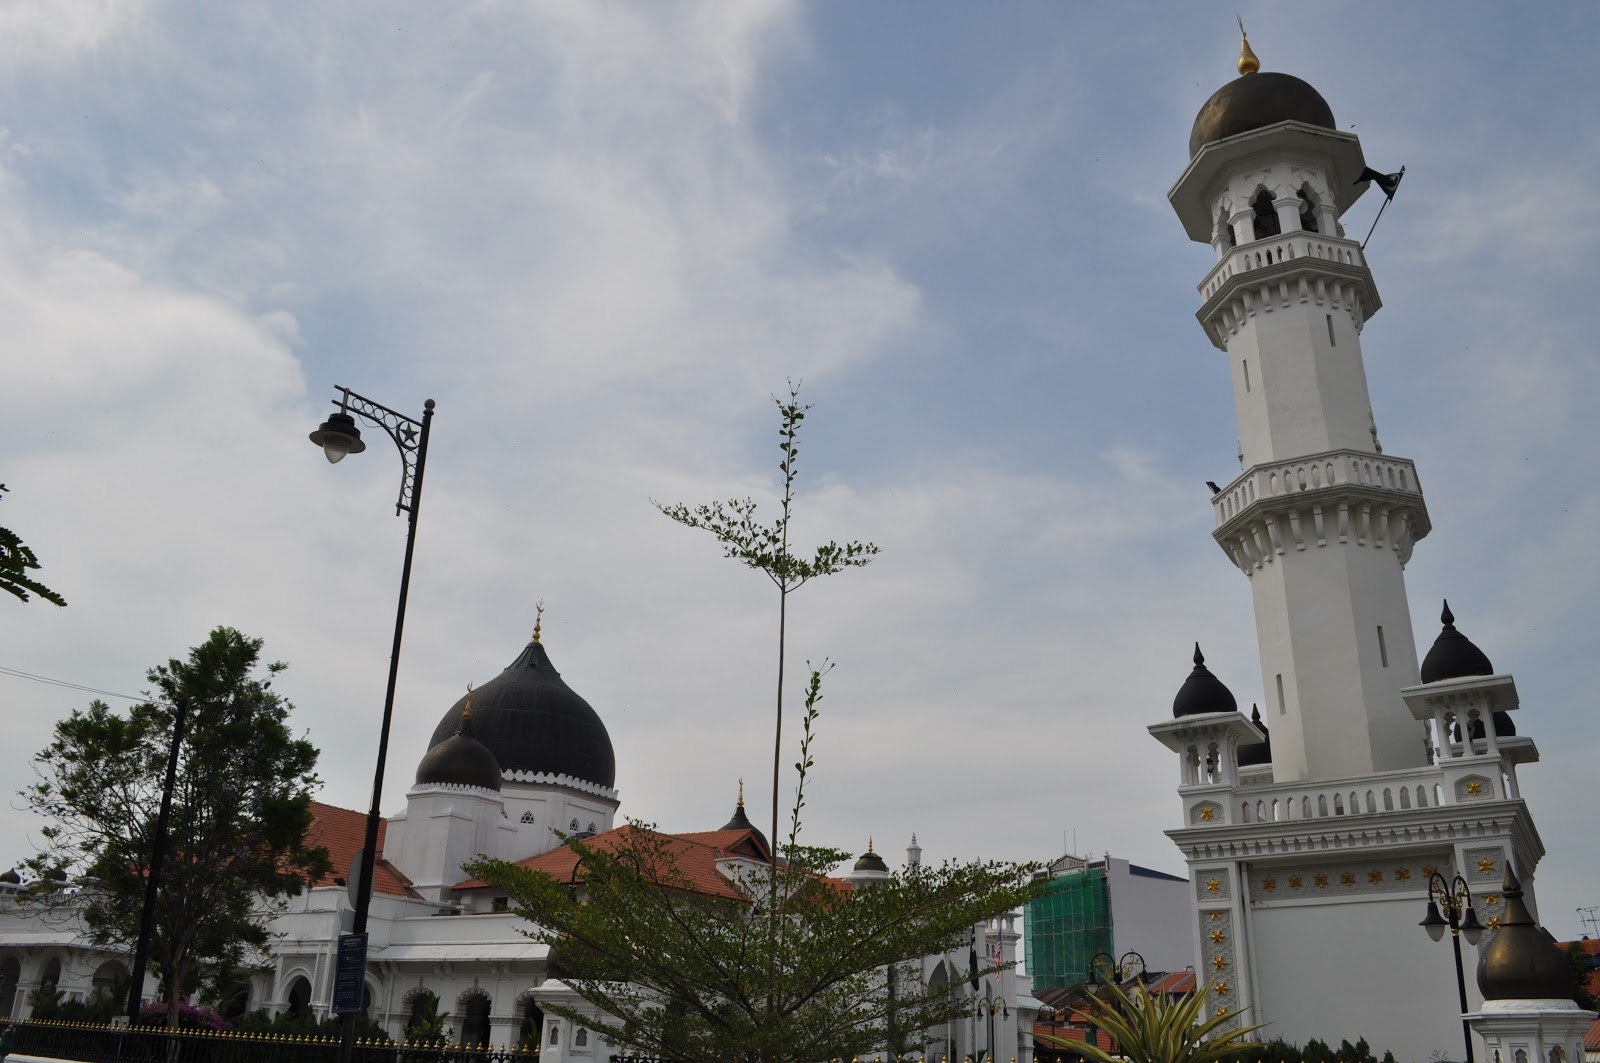 Muhammad Qul Amirul Hakim: Masjid Kapitan Keling, Pulau Pinang